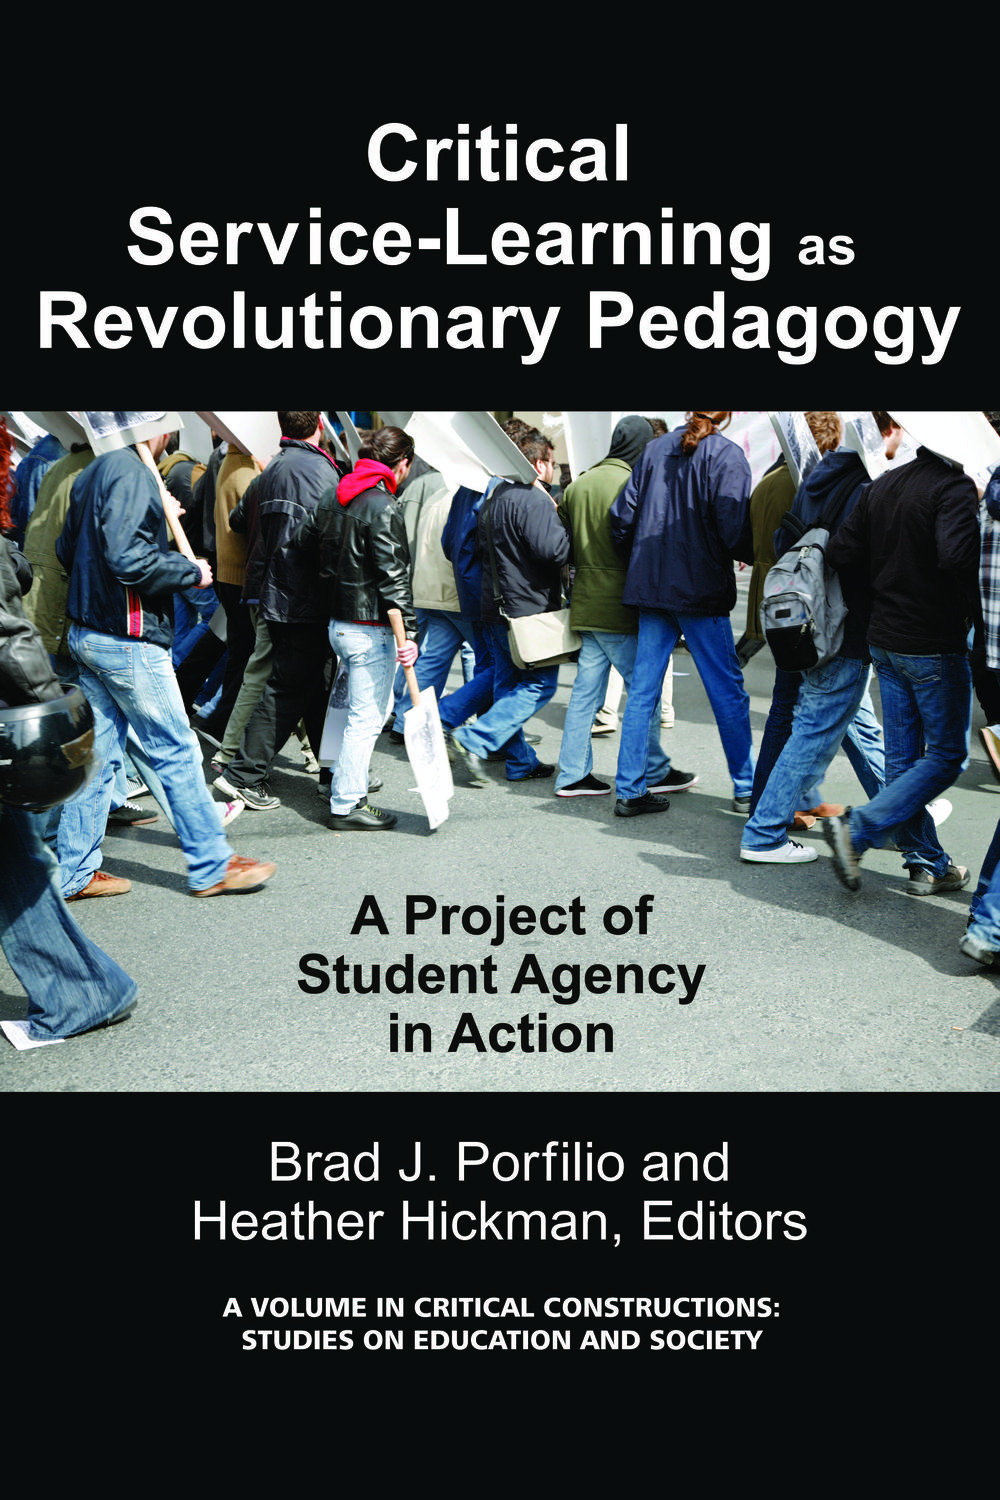 Critical-Service Learning as a Revolutionary Pedagogy - Brad J. Porfilio, Heather Hickman